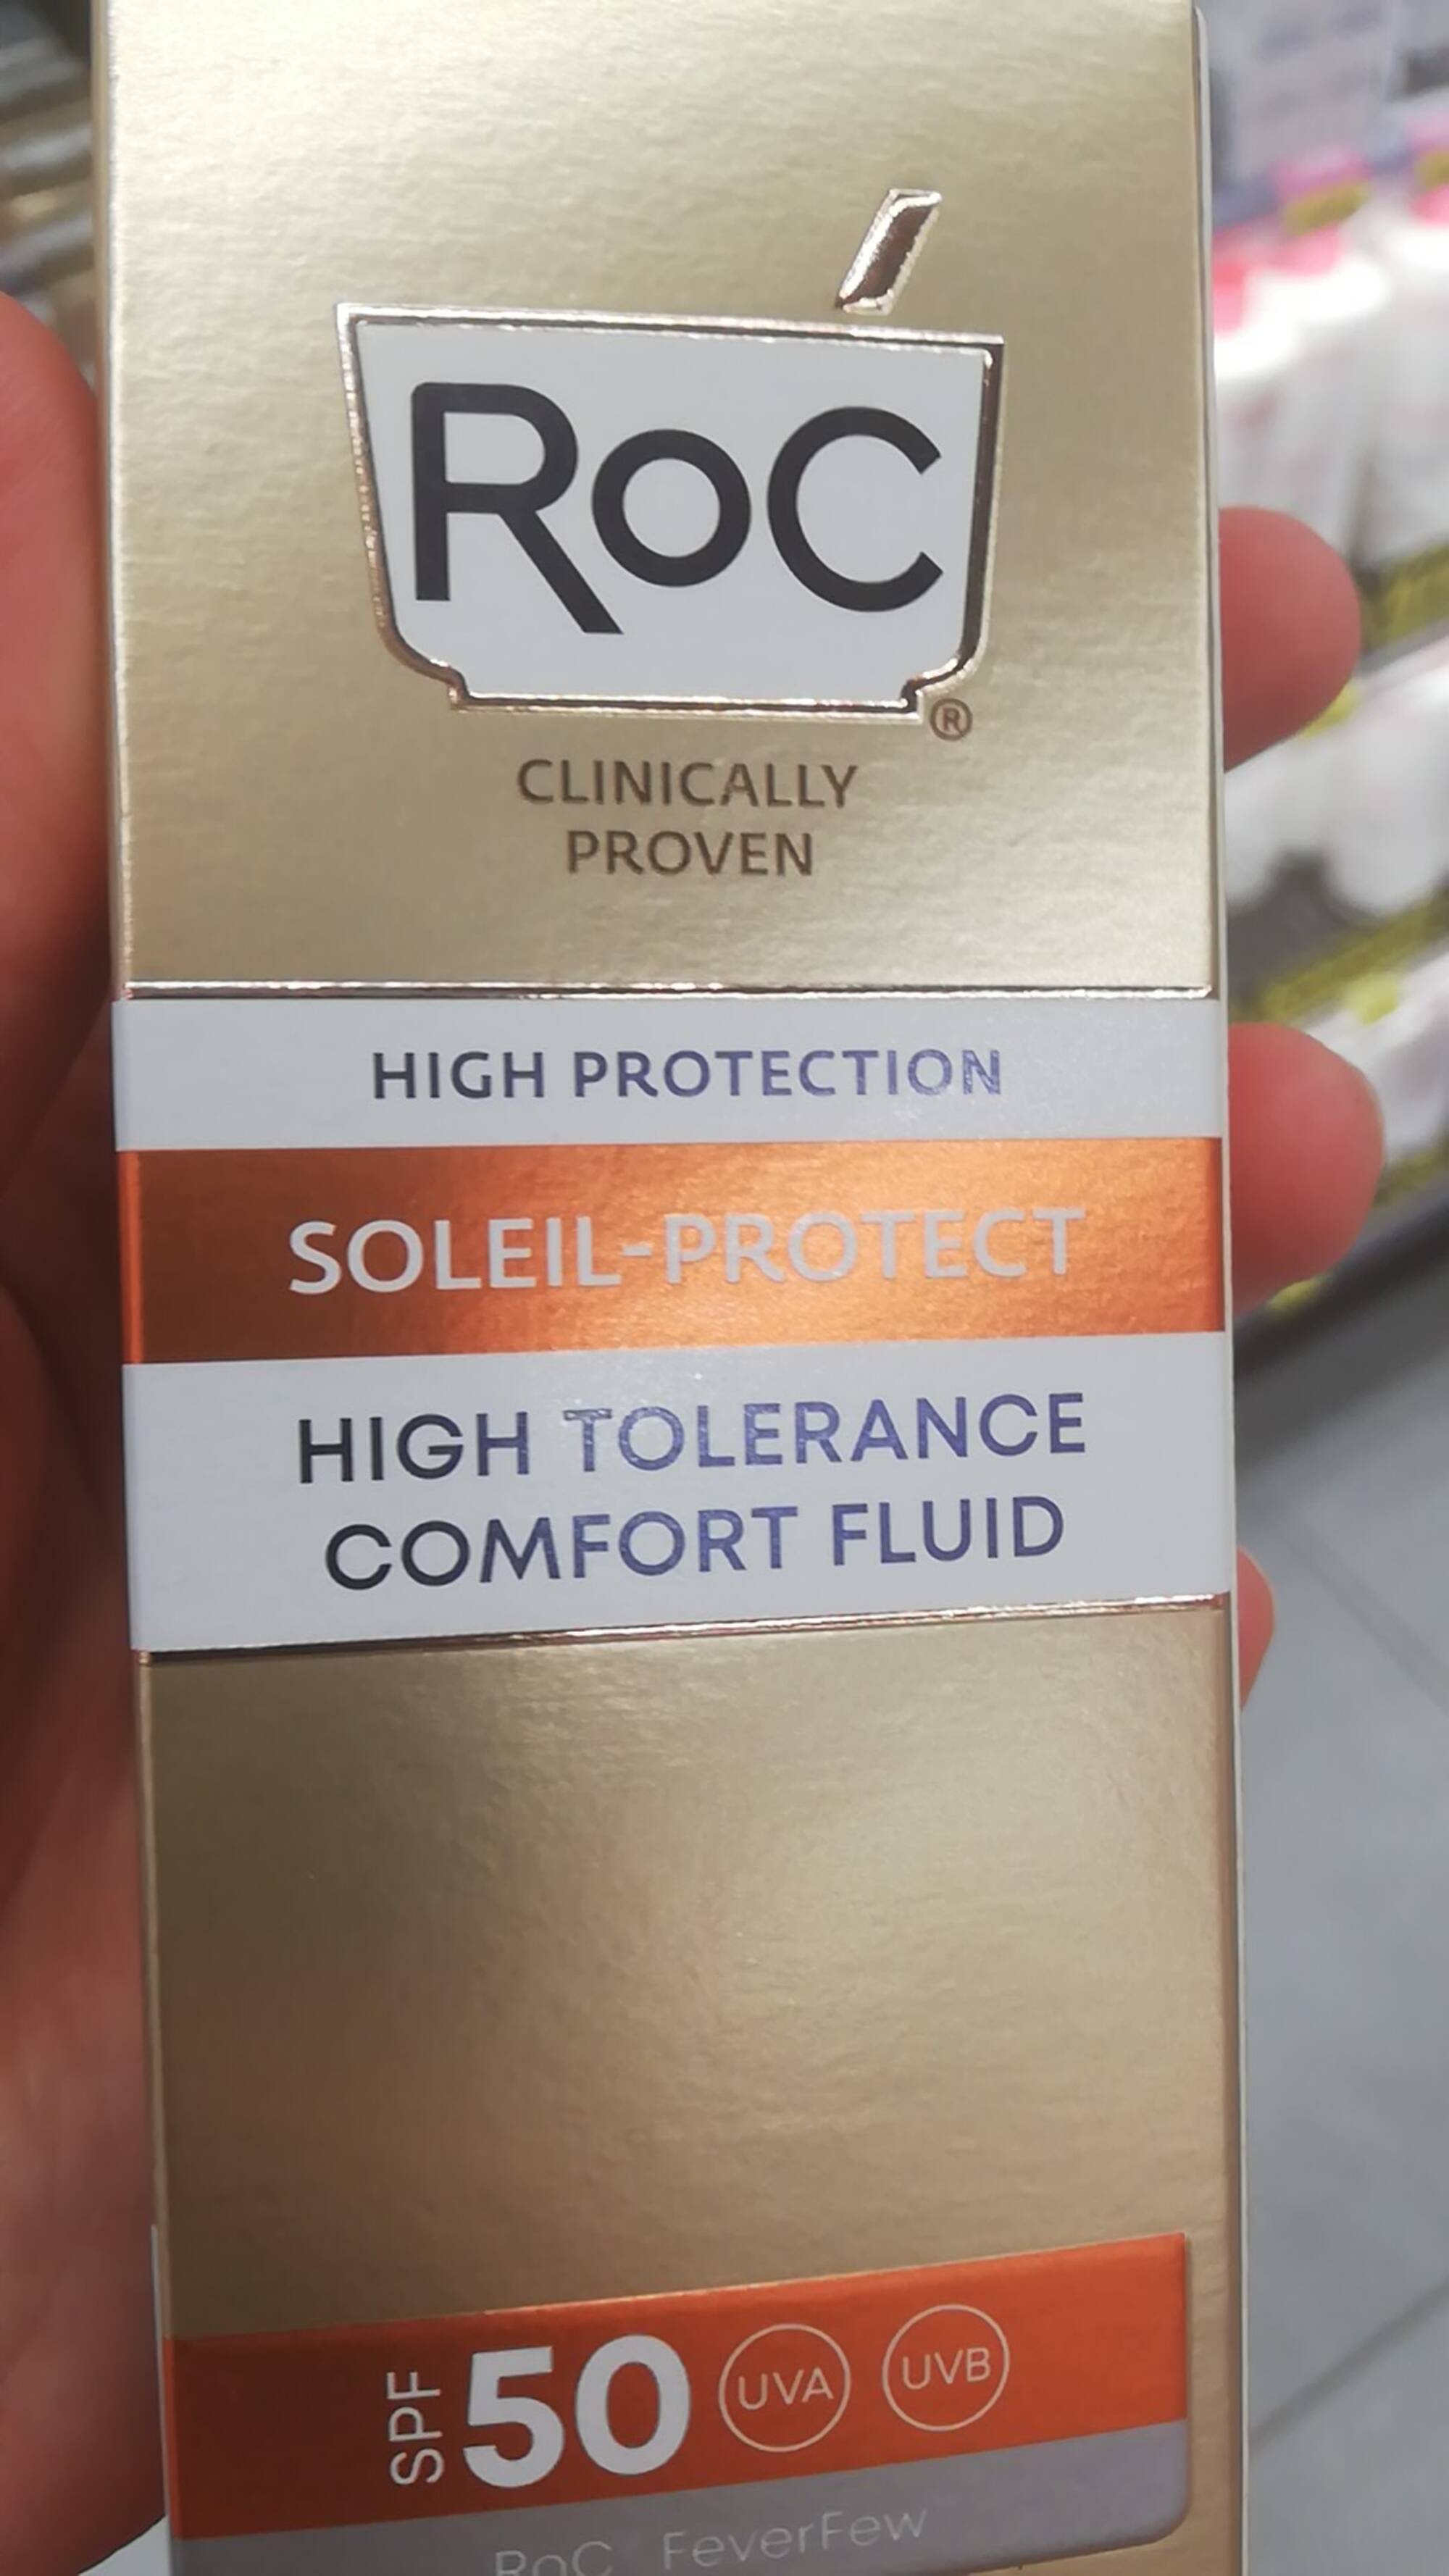 ROC - Soleil-protect high tolerance comfort fluid SPF 50